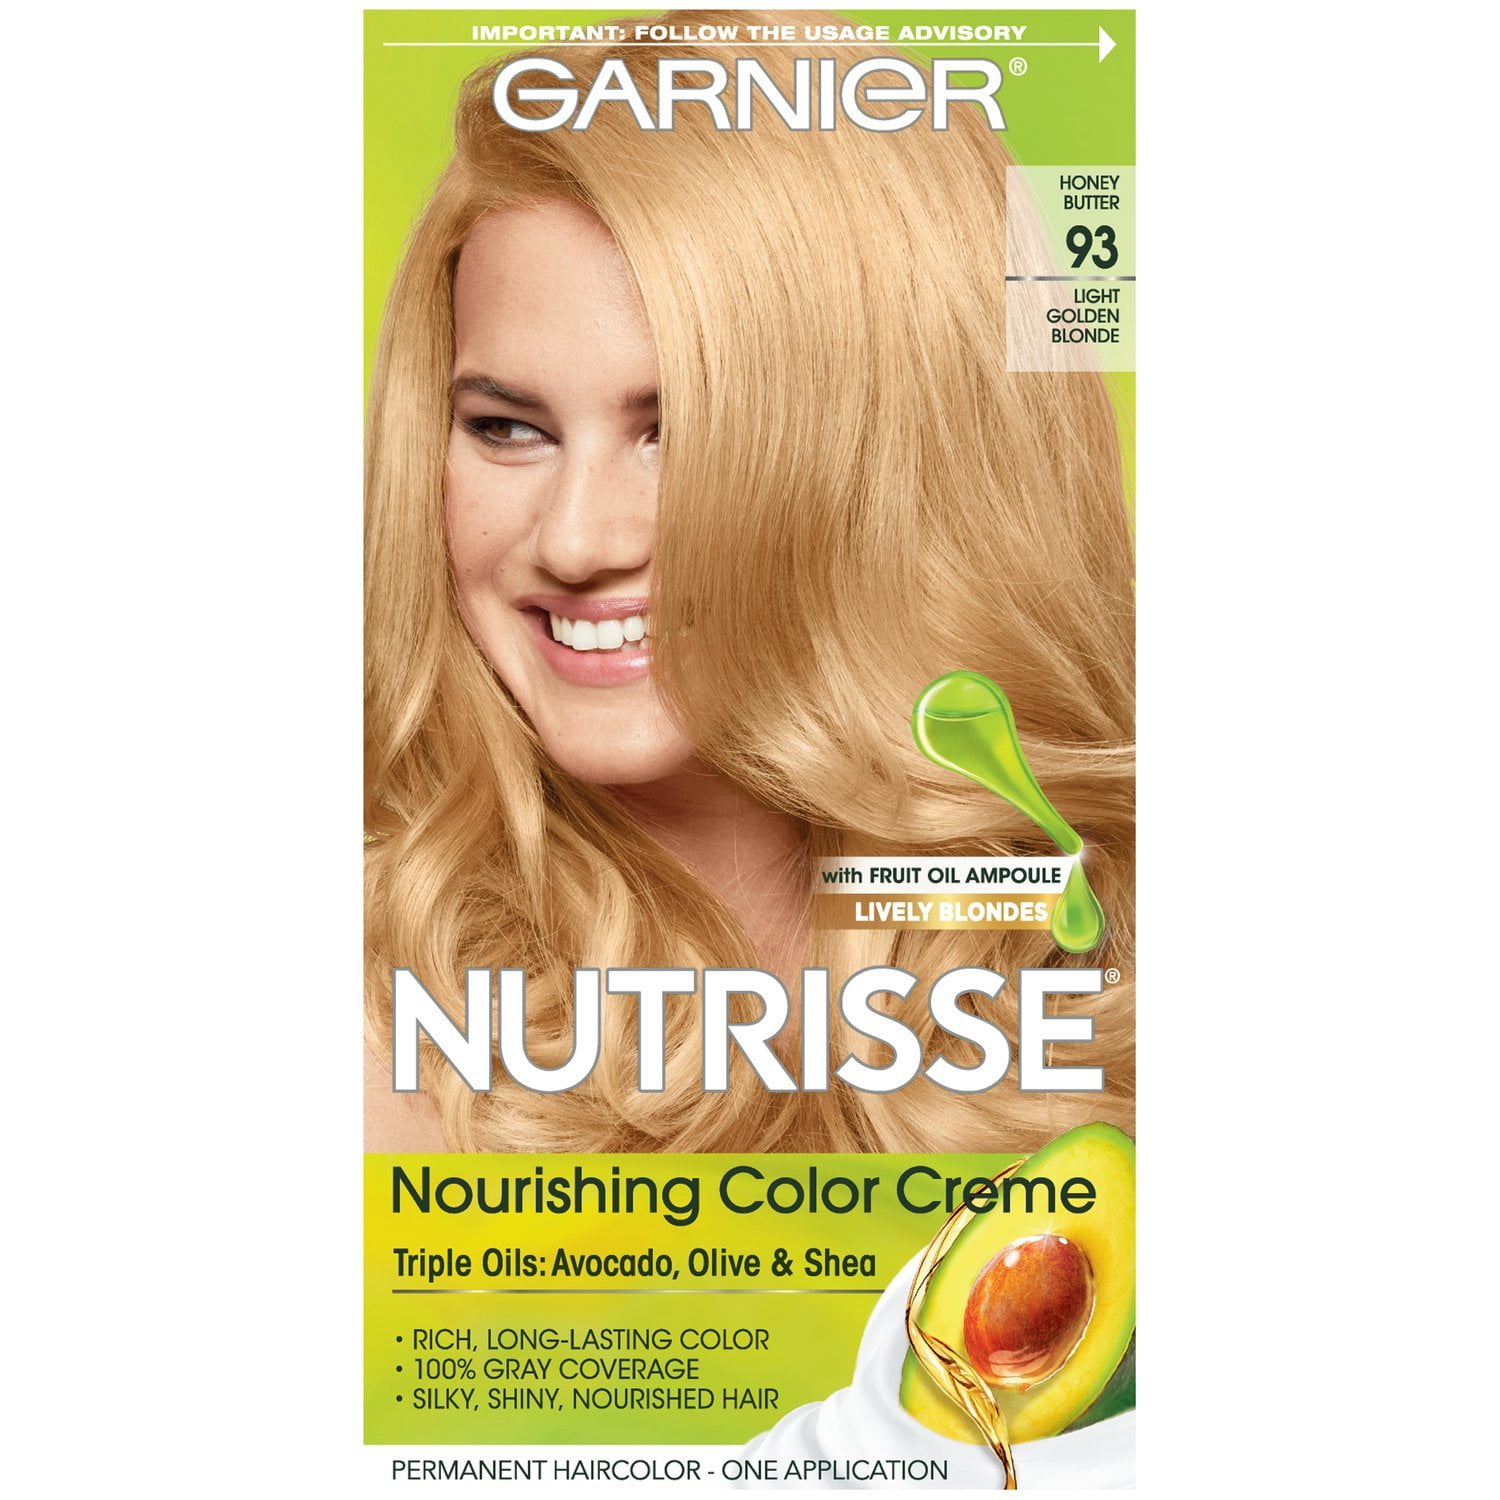 Garnier Nutrisse Nourishing Hair Color Creme 93 Light Golden Blonde Honey Butter